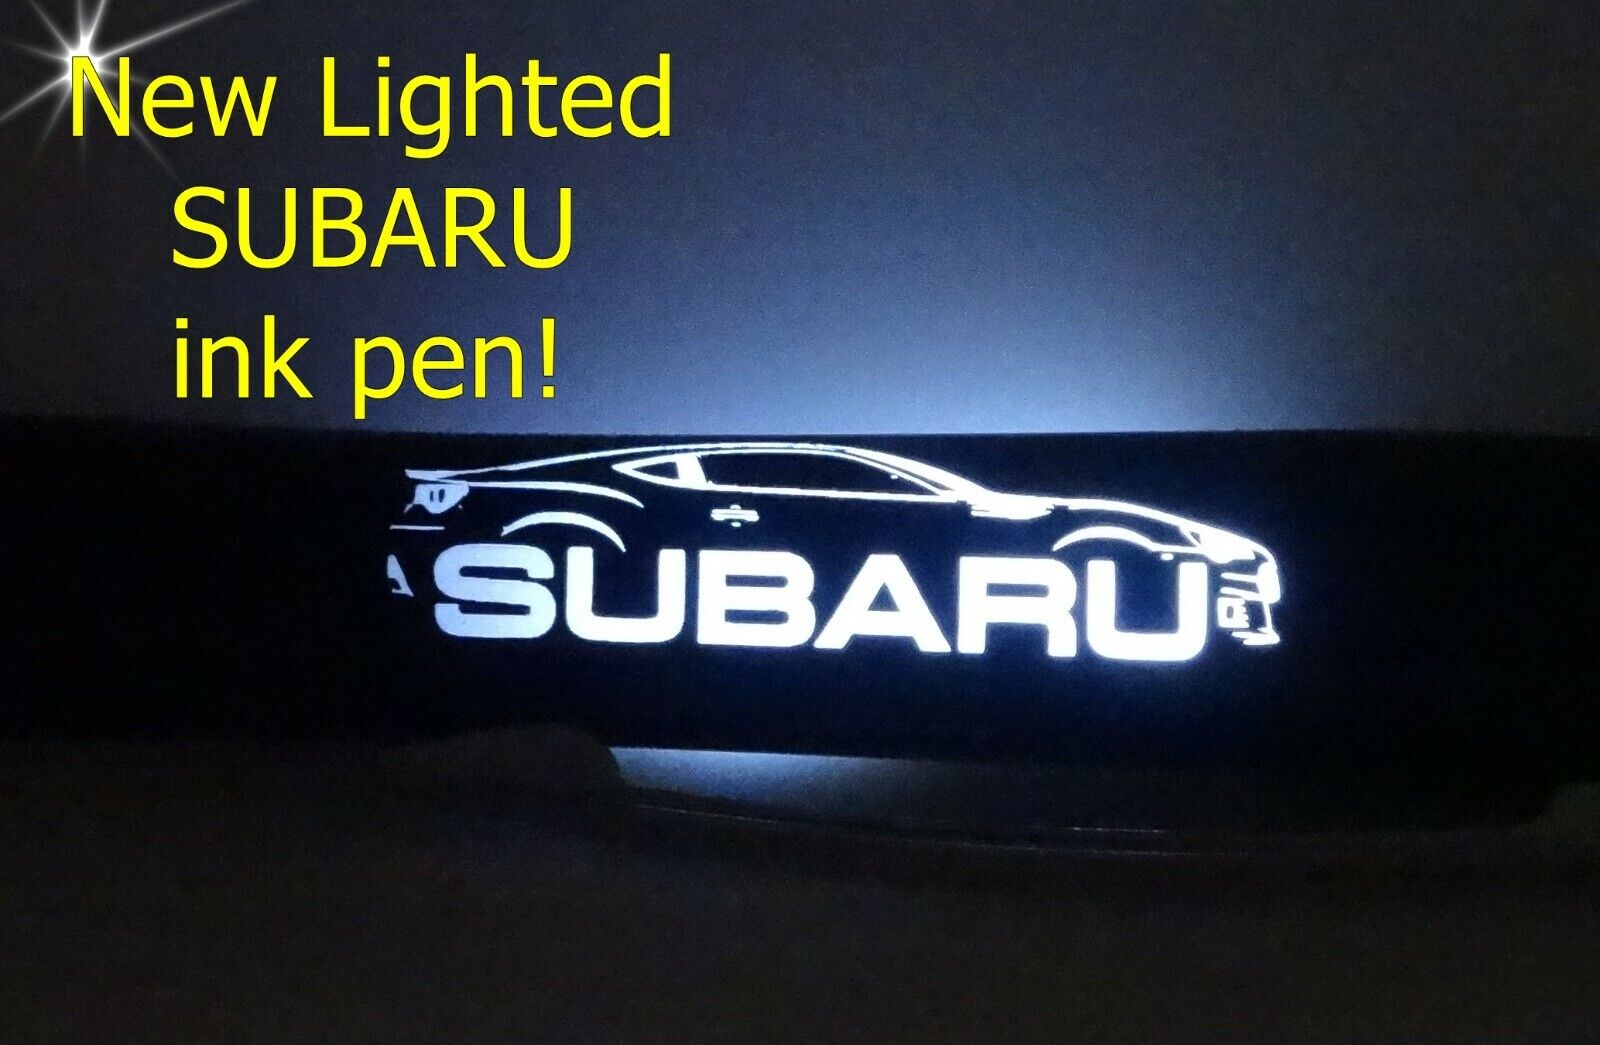 Lighted Subaru car ink pen